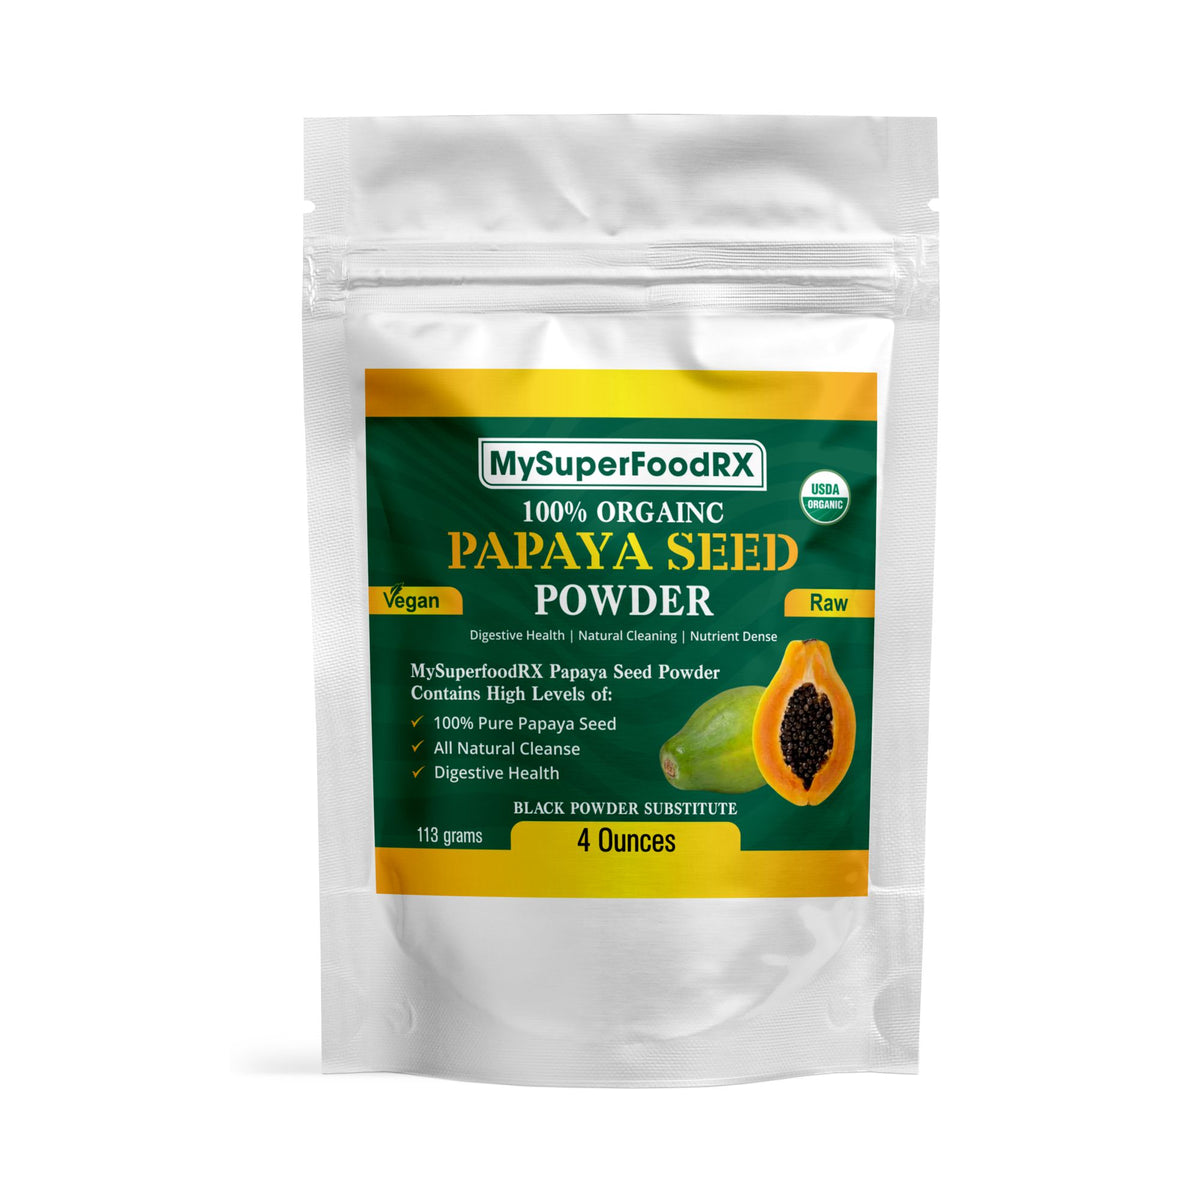 a bag of papaya seed powder on a white background